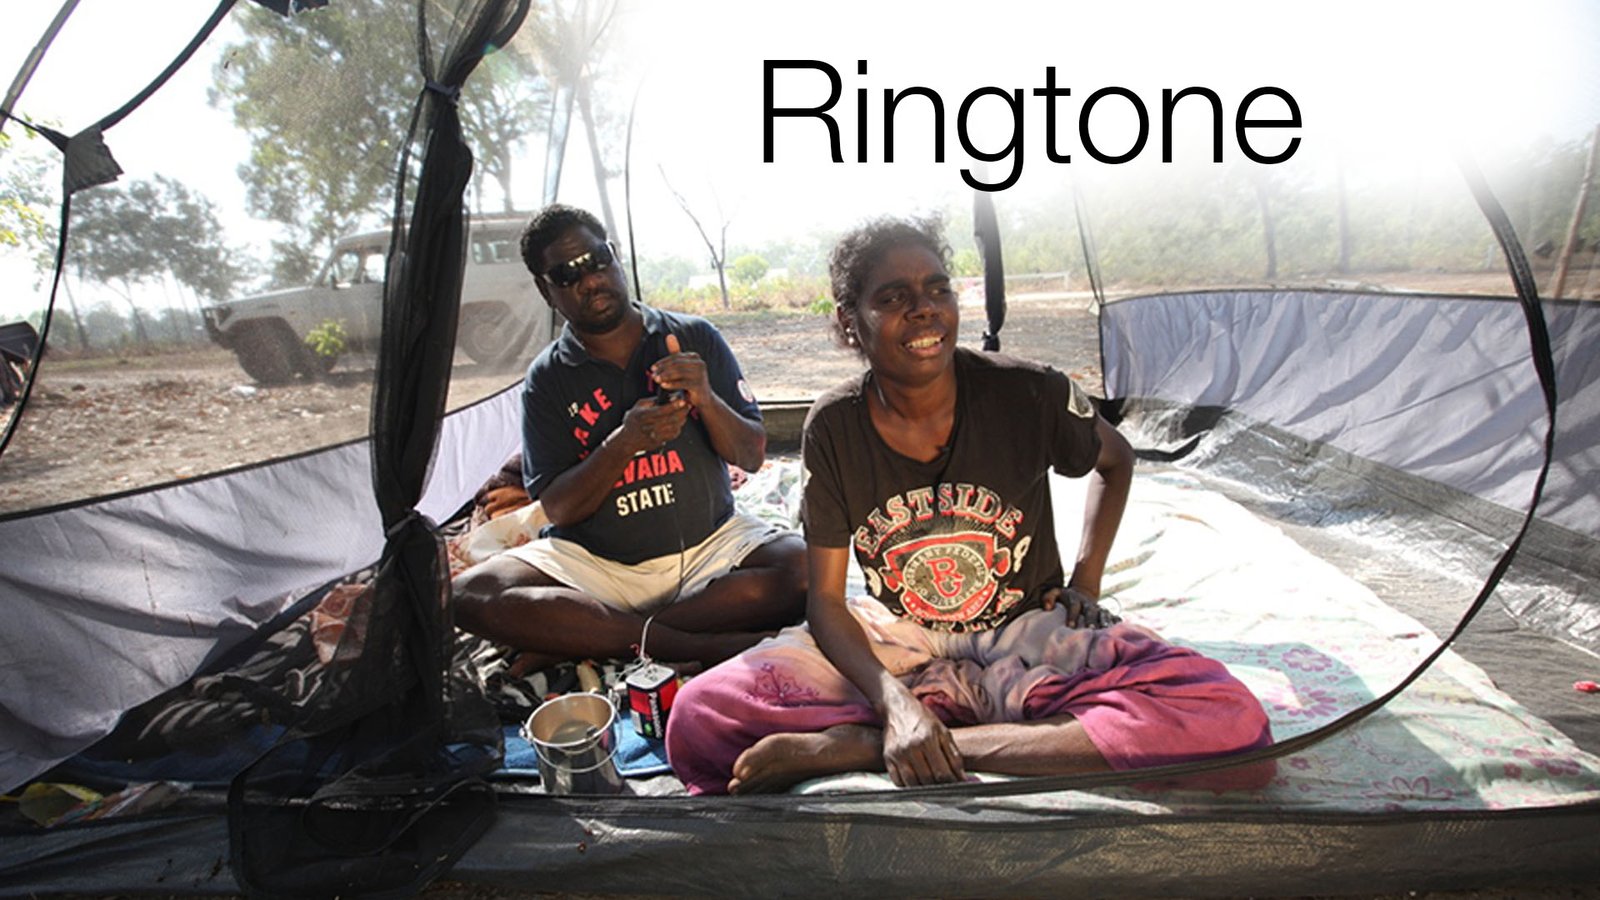 Ringtone - Mobile Phones in a an Australian Indigenous Community